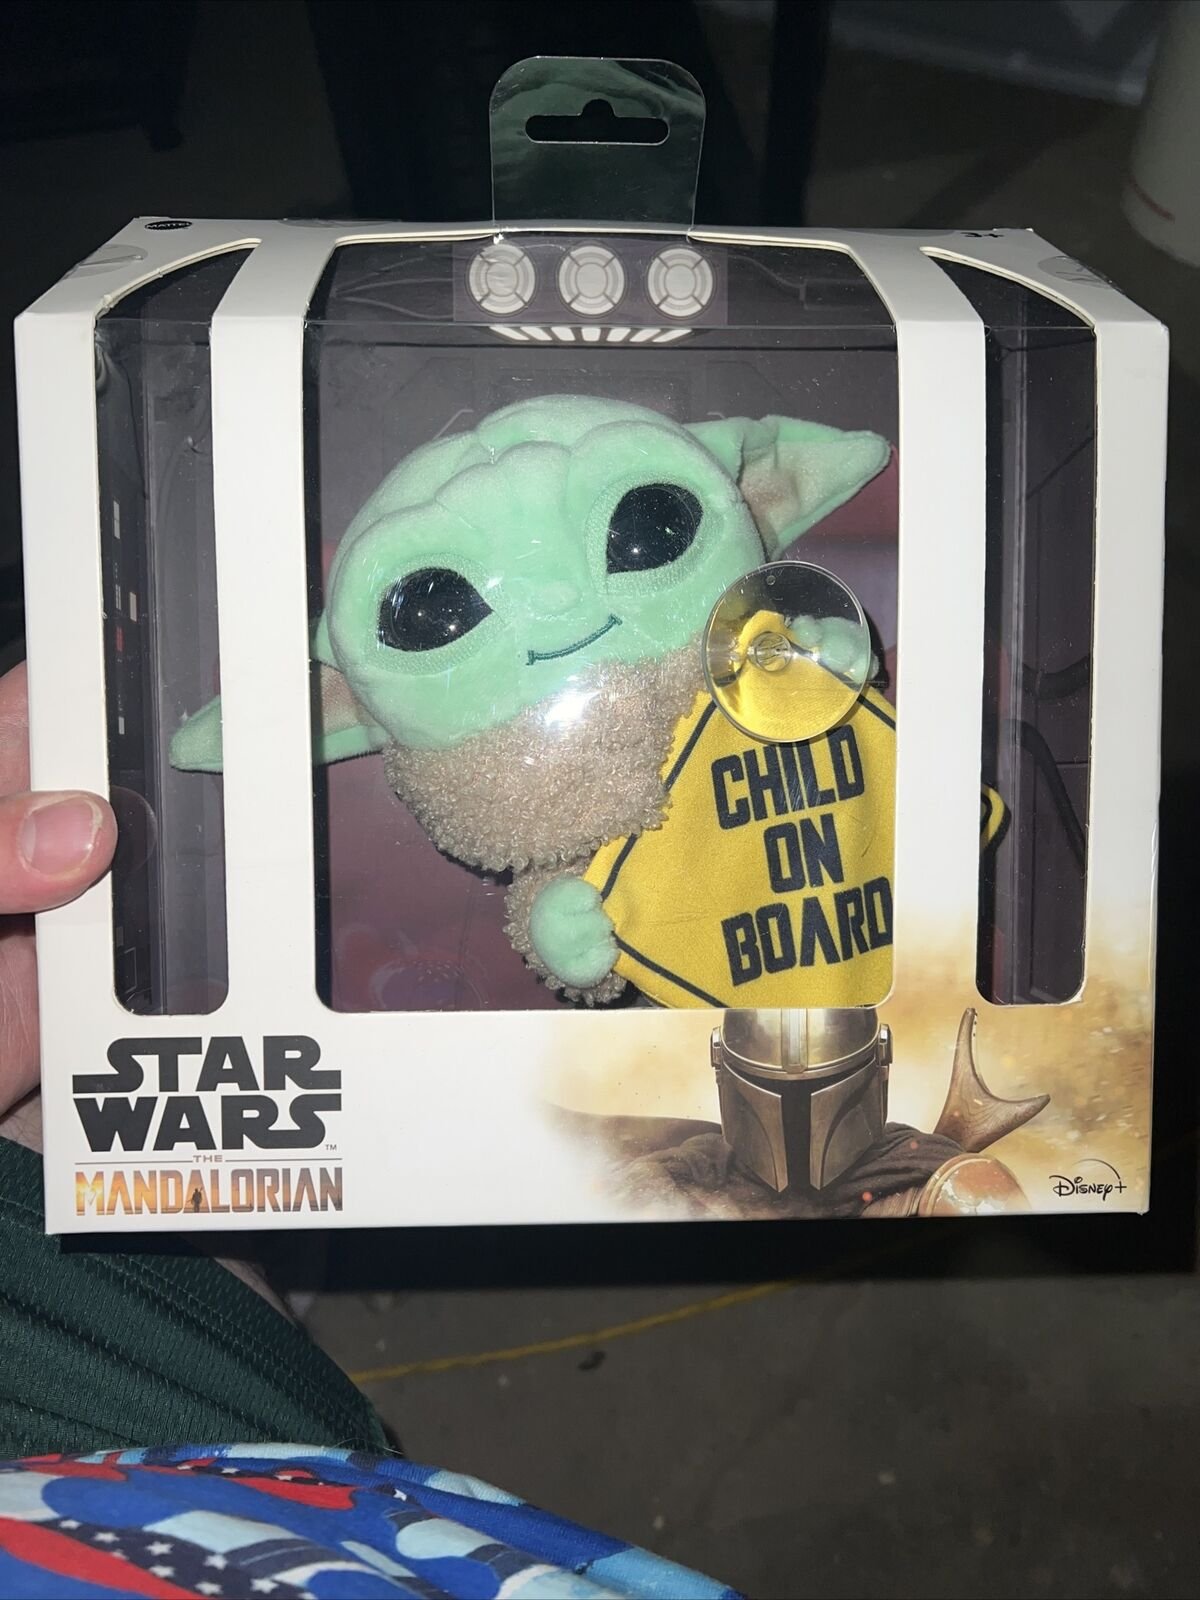 Baby Yoda Plush Stuffed Animal 8 inch Grogu Doll Star Wars The